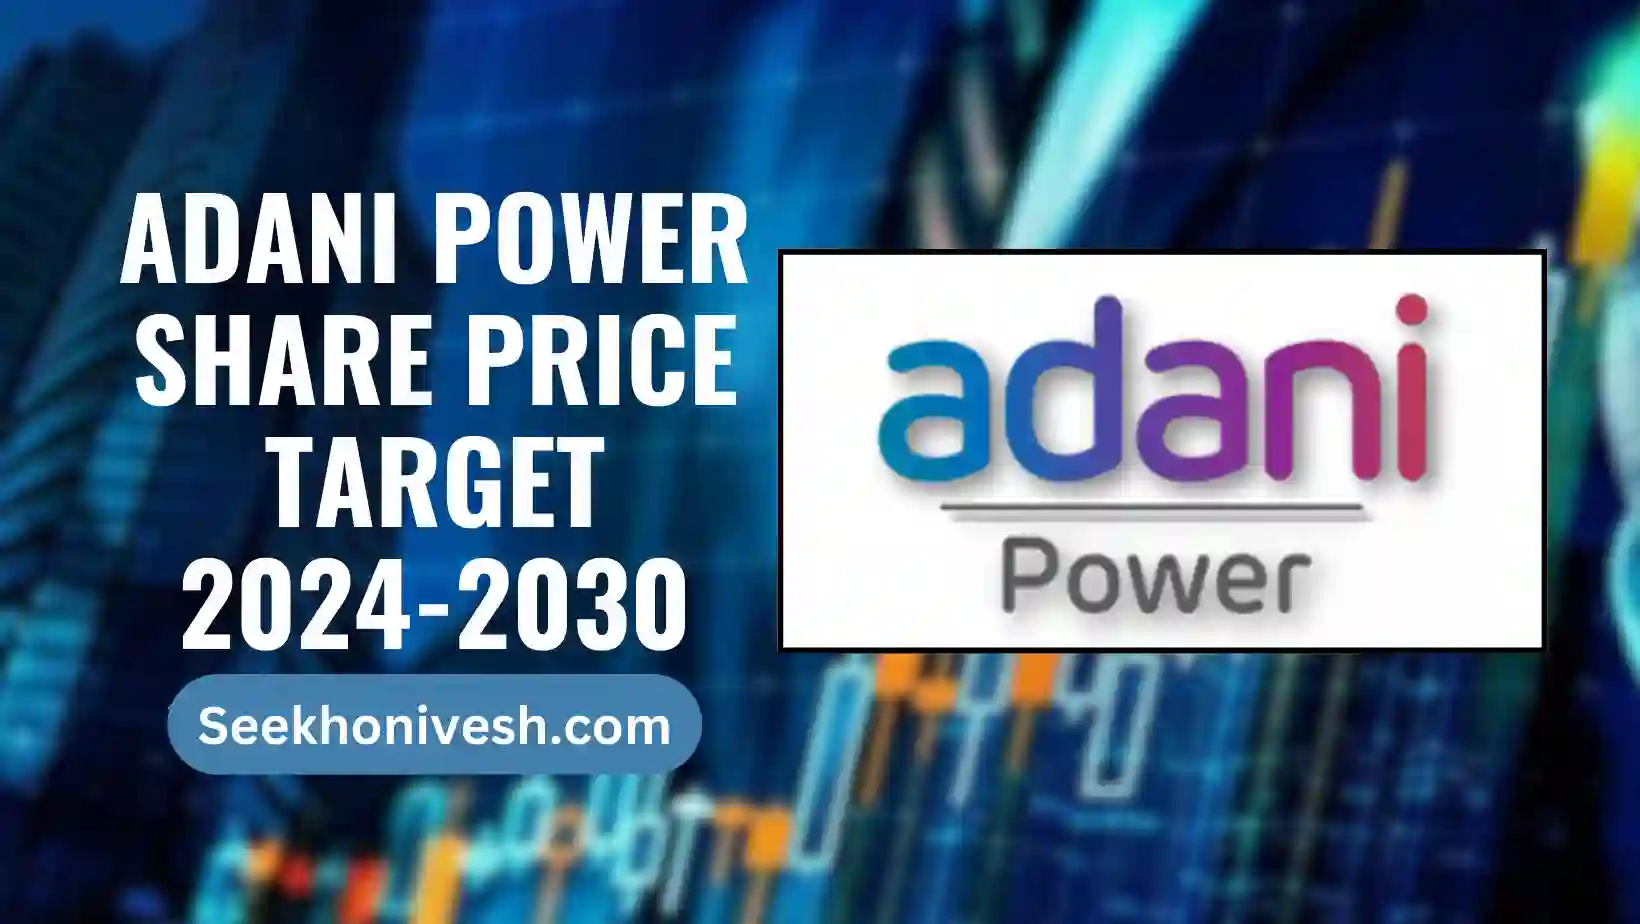 Adani Power Share price target 2025-2030